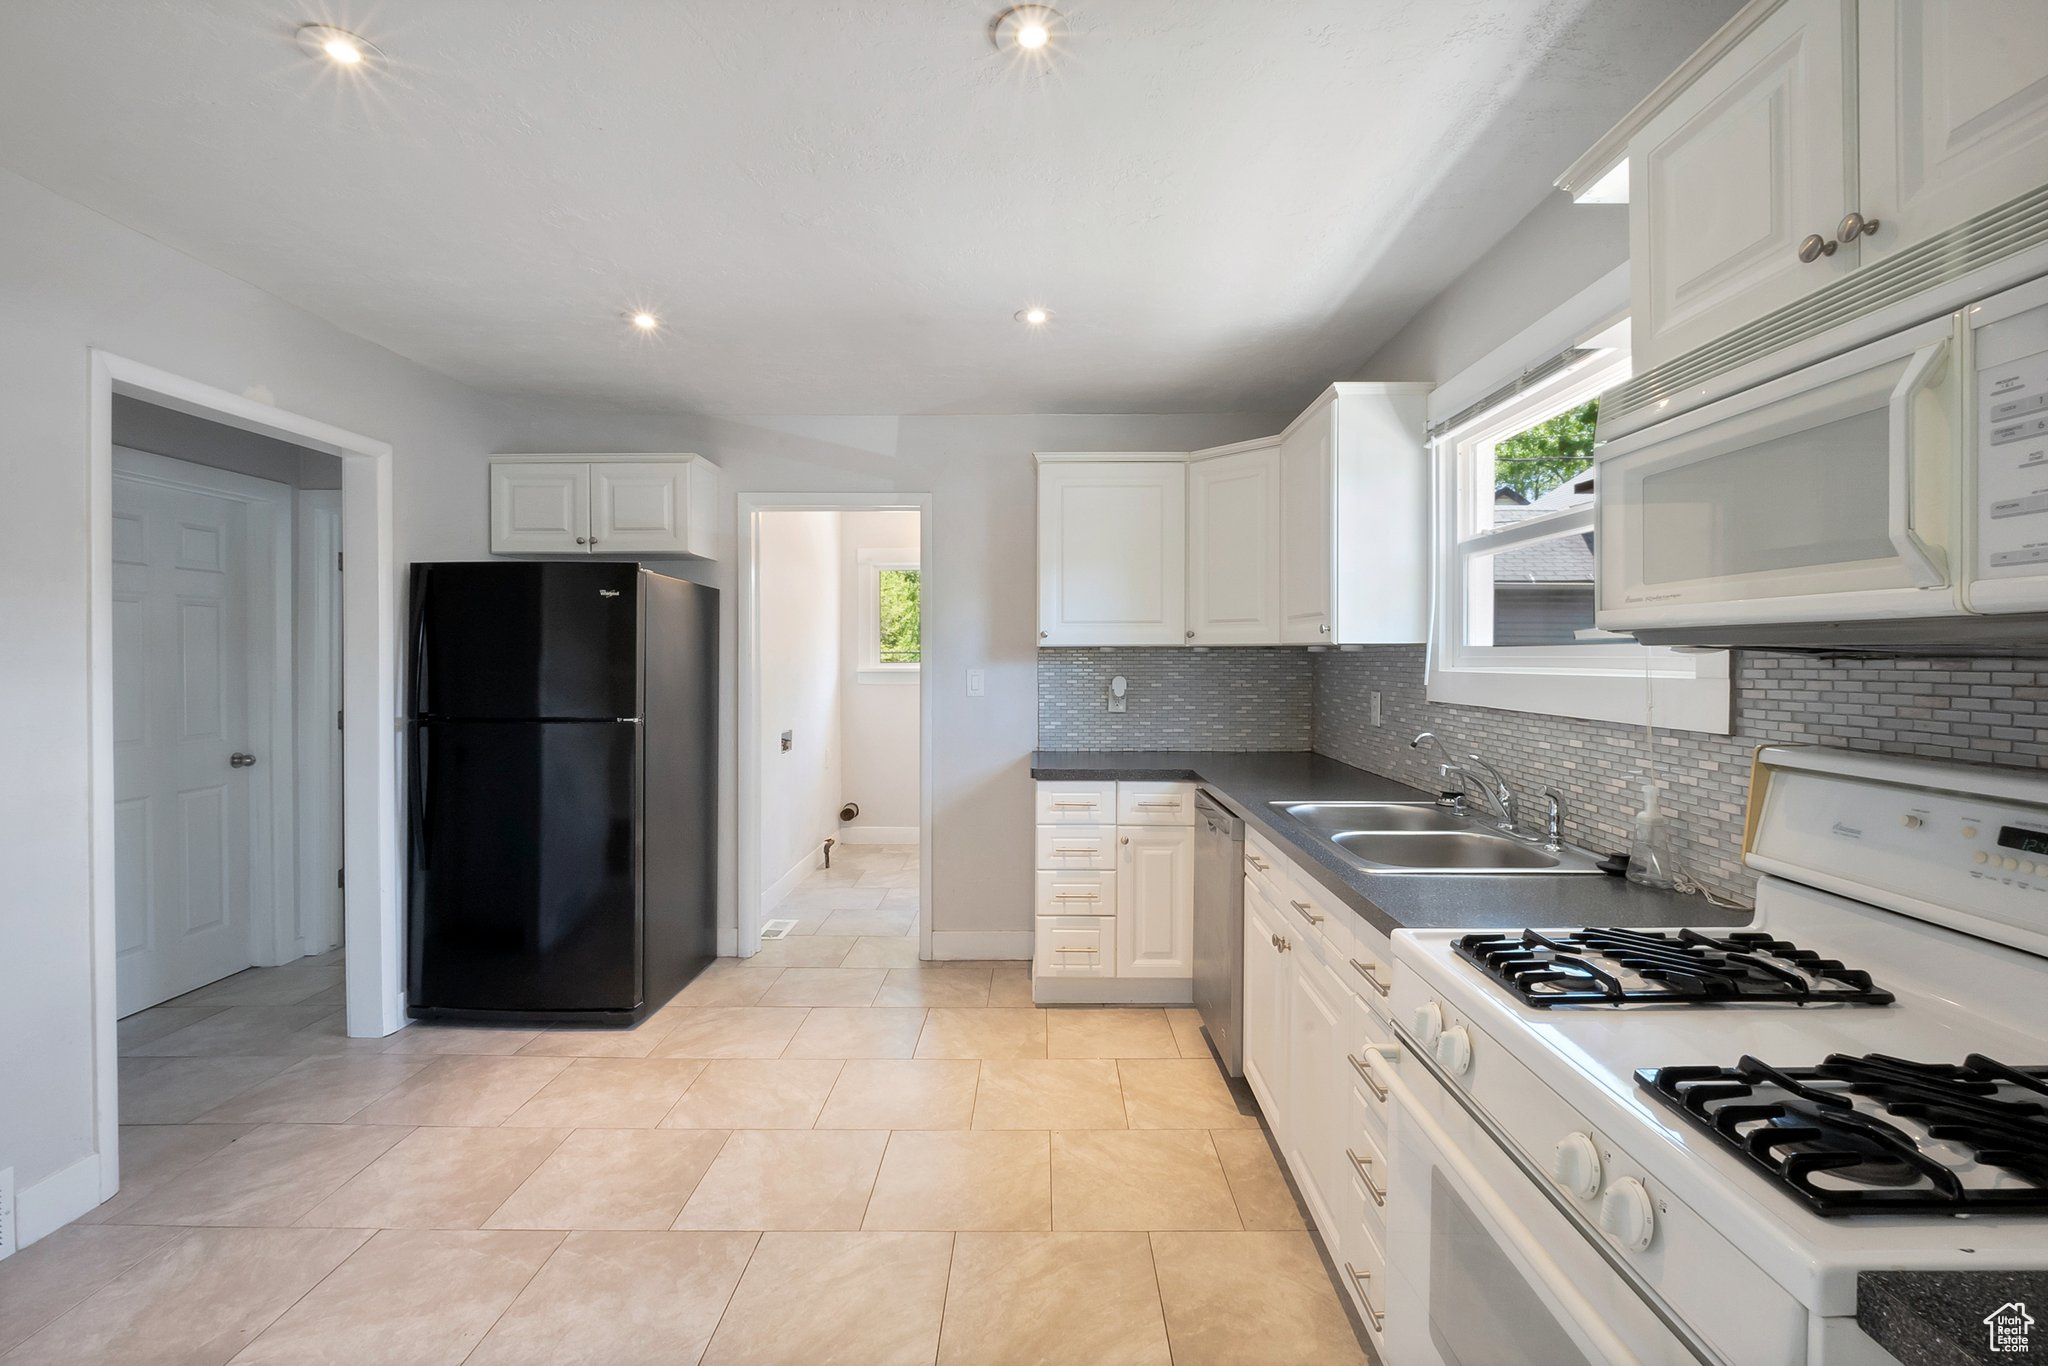 Kitchen featuring white cabinets, light tile flooring, backsplash, sink, and white appliances